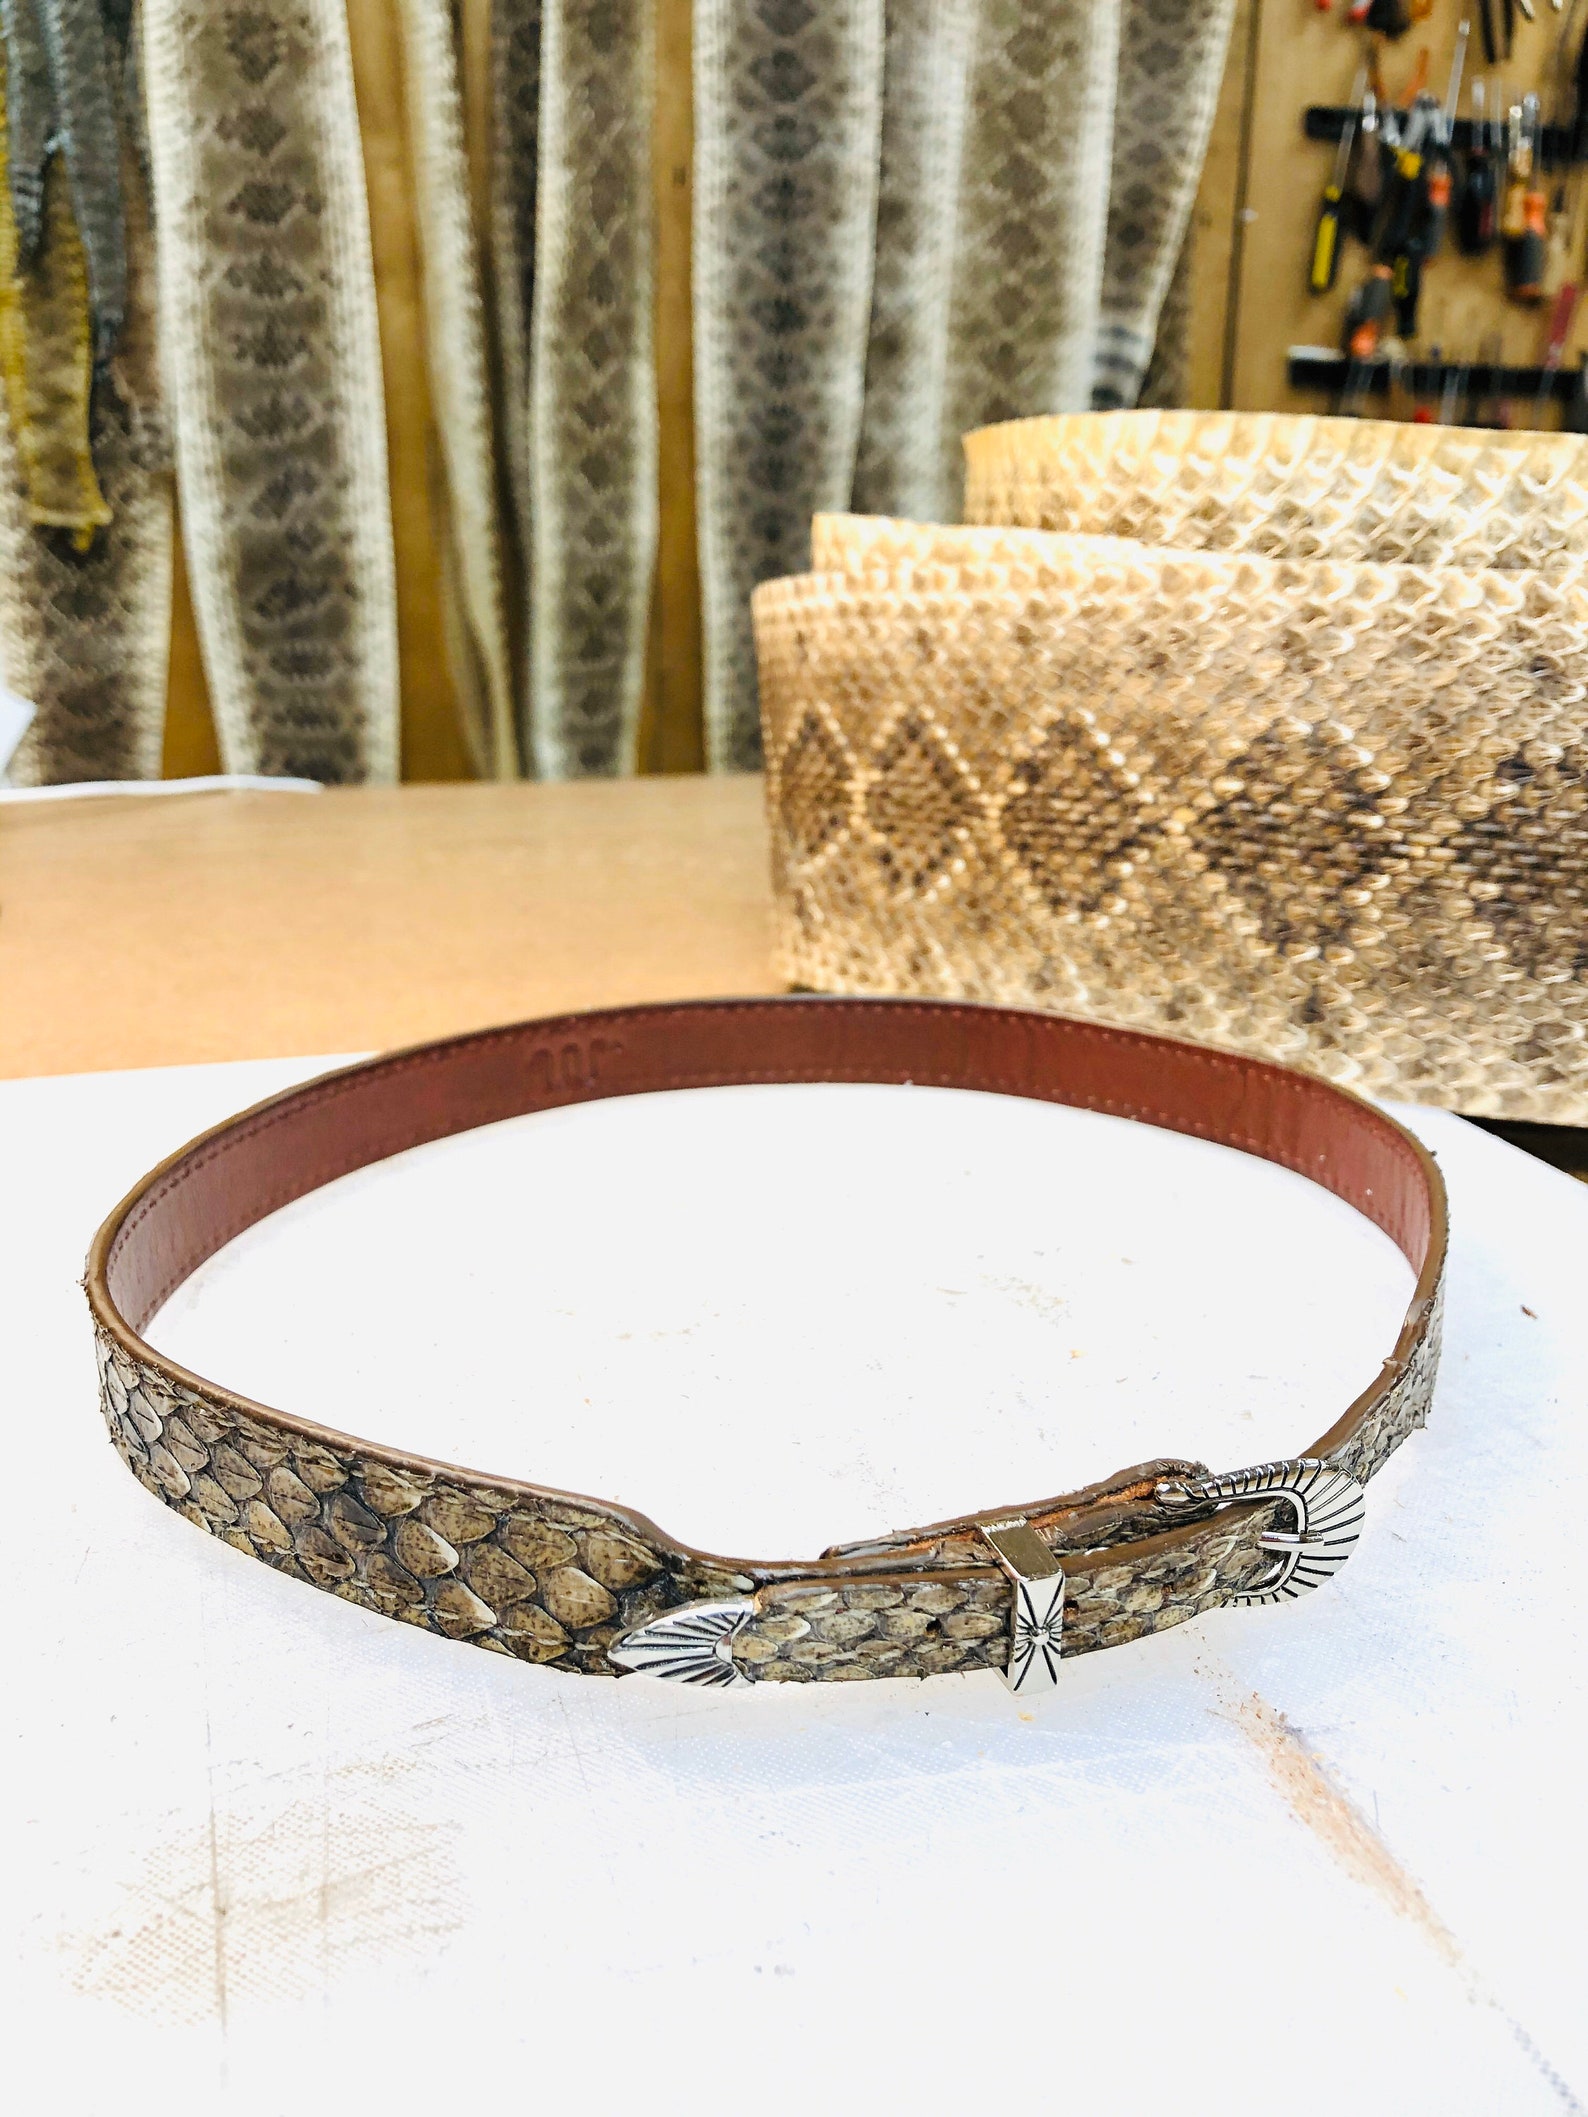 Diamondback Rattlesnake Hatband - Etsy